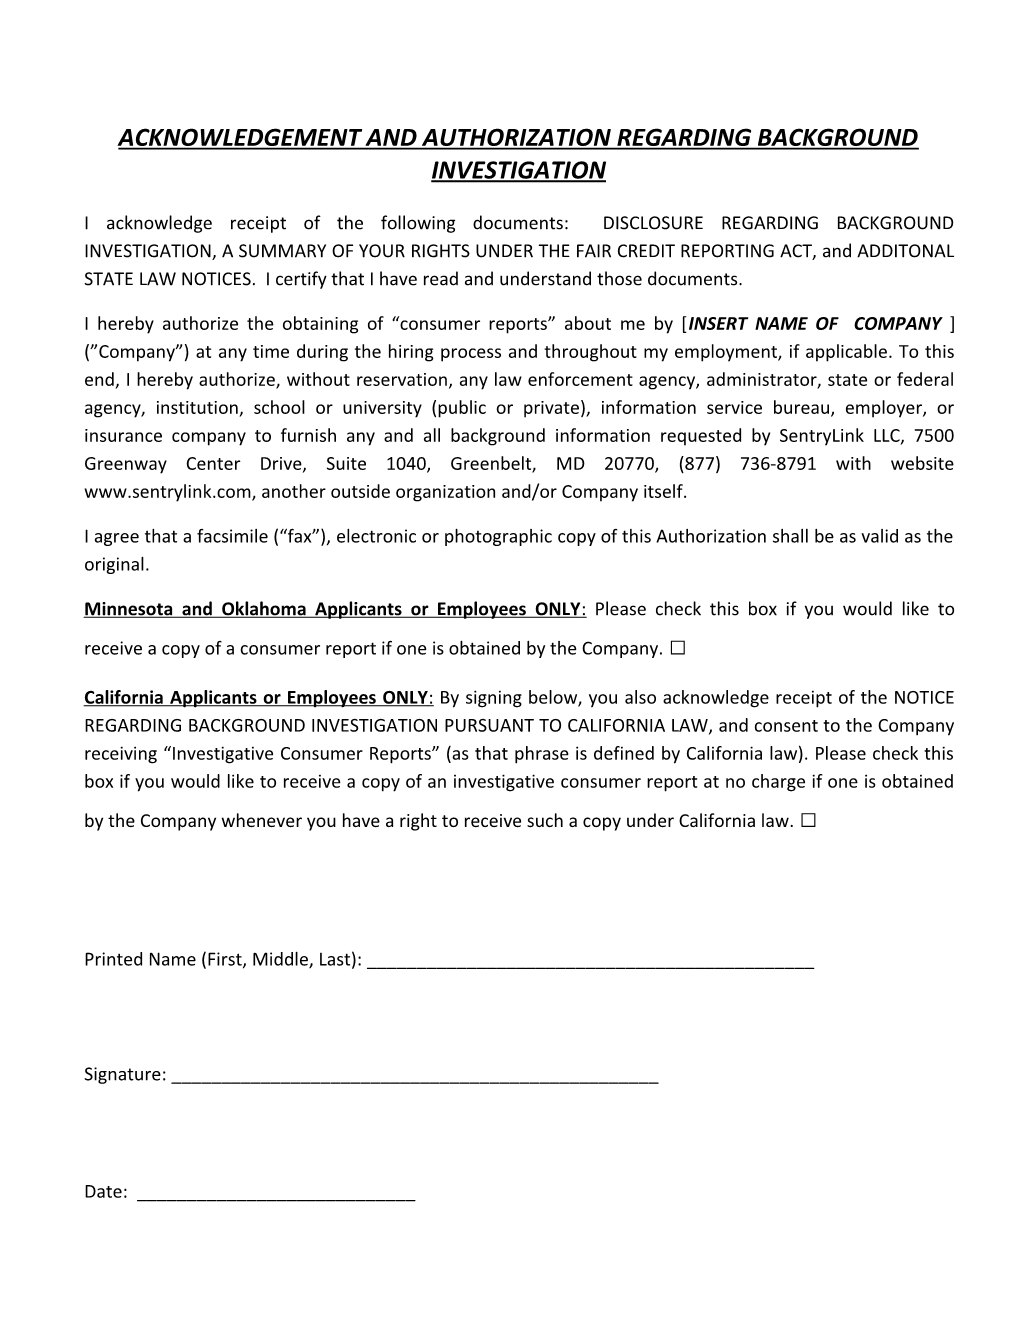 Acknowledgement and Authorization Regarding Background Investigation